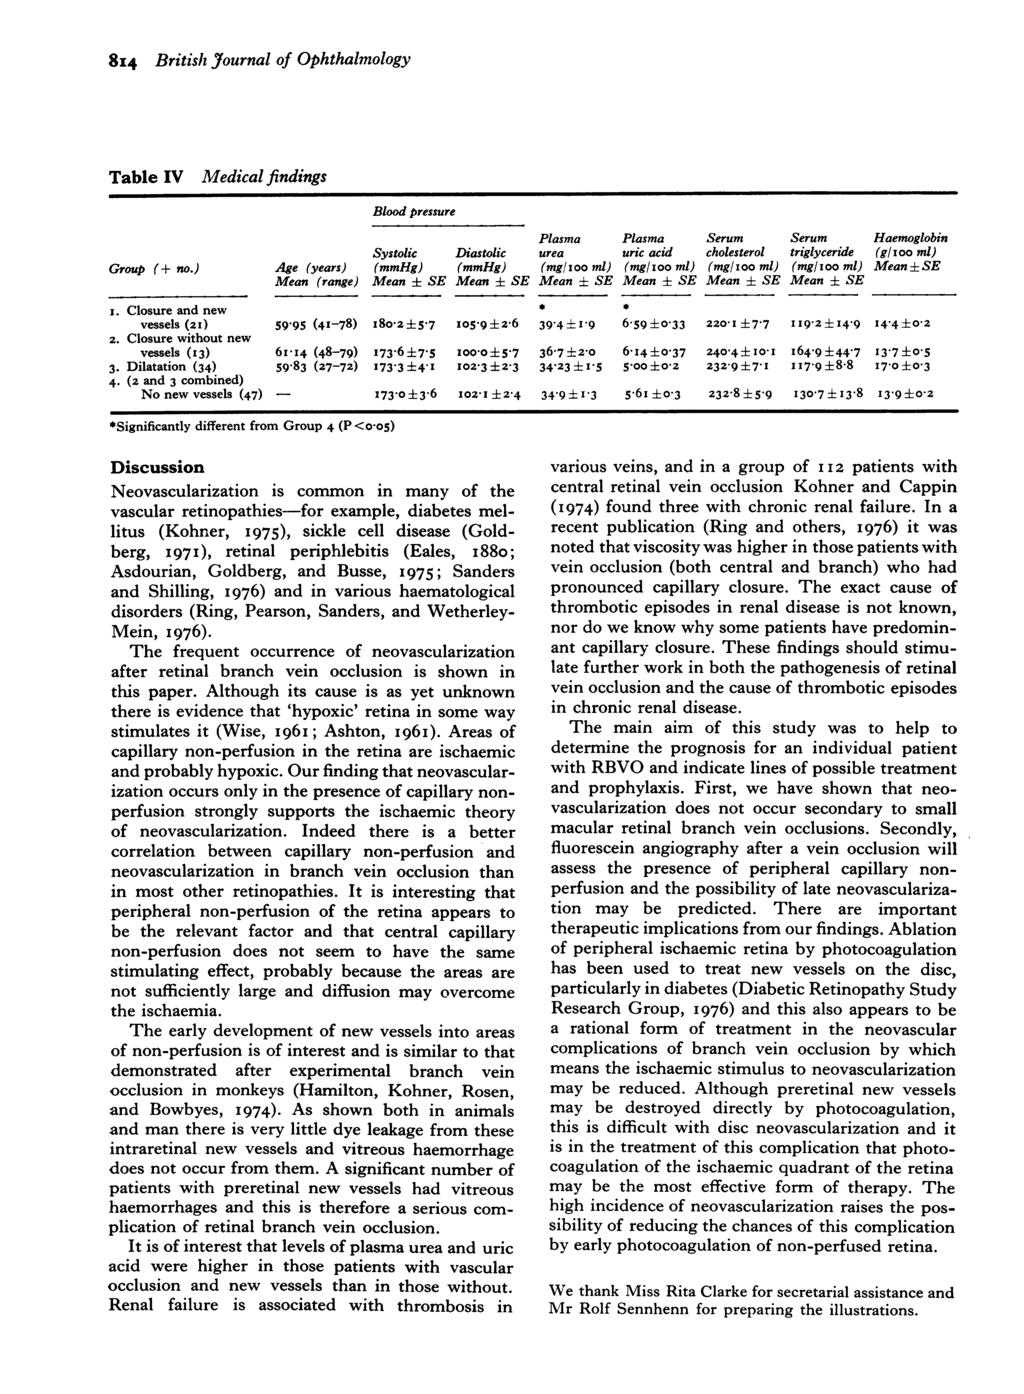 814 British Journal of Ophthalmology Table IV Medical findings Blood pressure Plasma Plasma Serum Serum Haemoglobin Systolic Diastolic urea uric acid cholesterol triglyceride (g/ioo ml) Group (+ no.